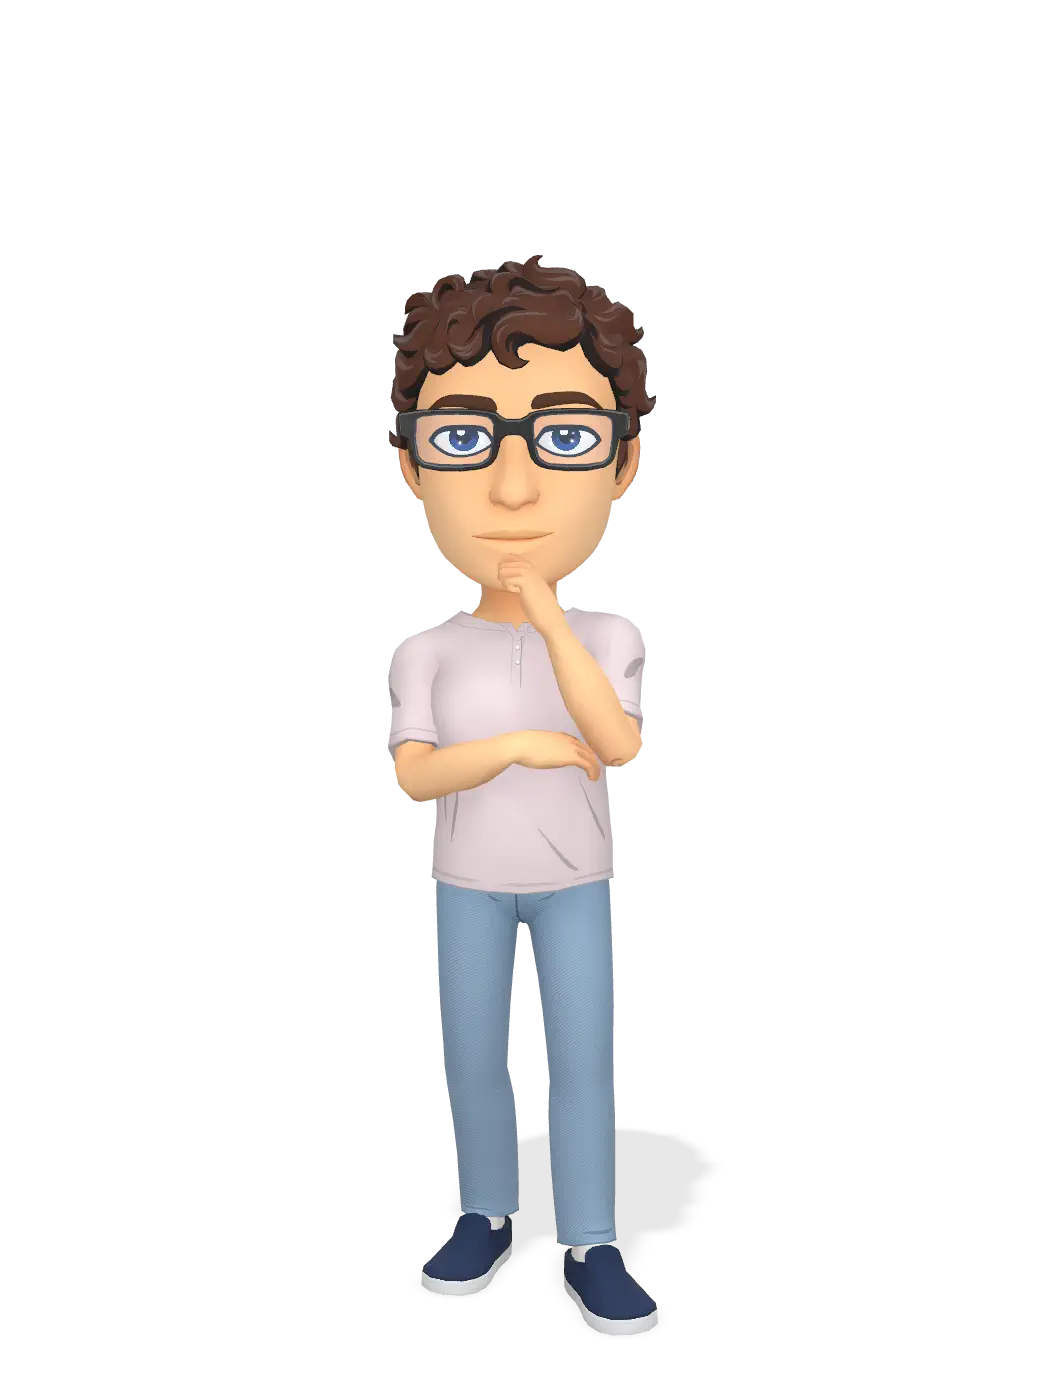 3D Bitmoji for tommyj0 avatar